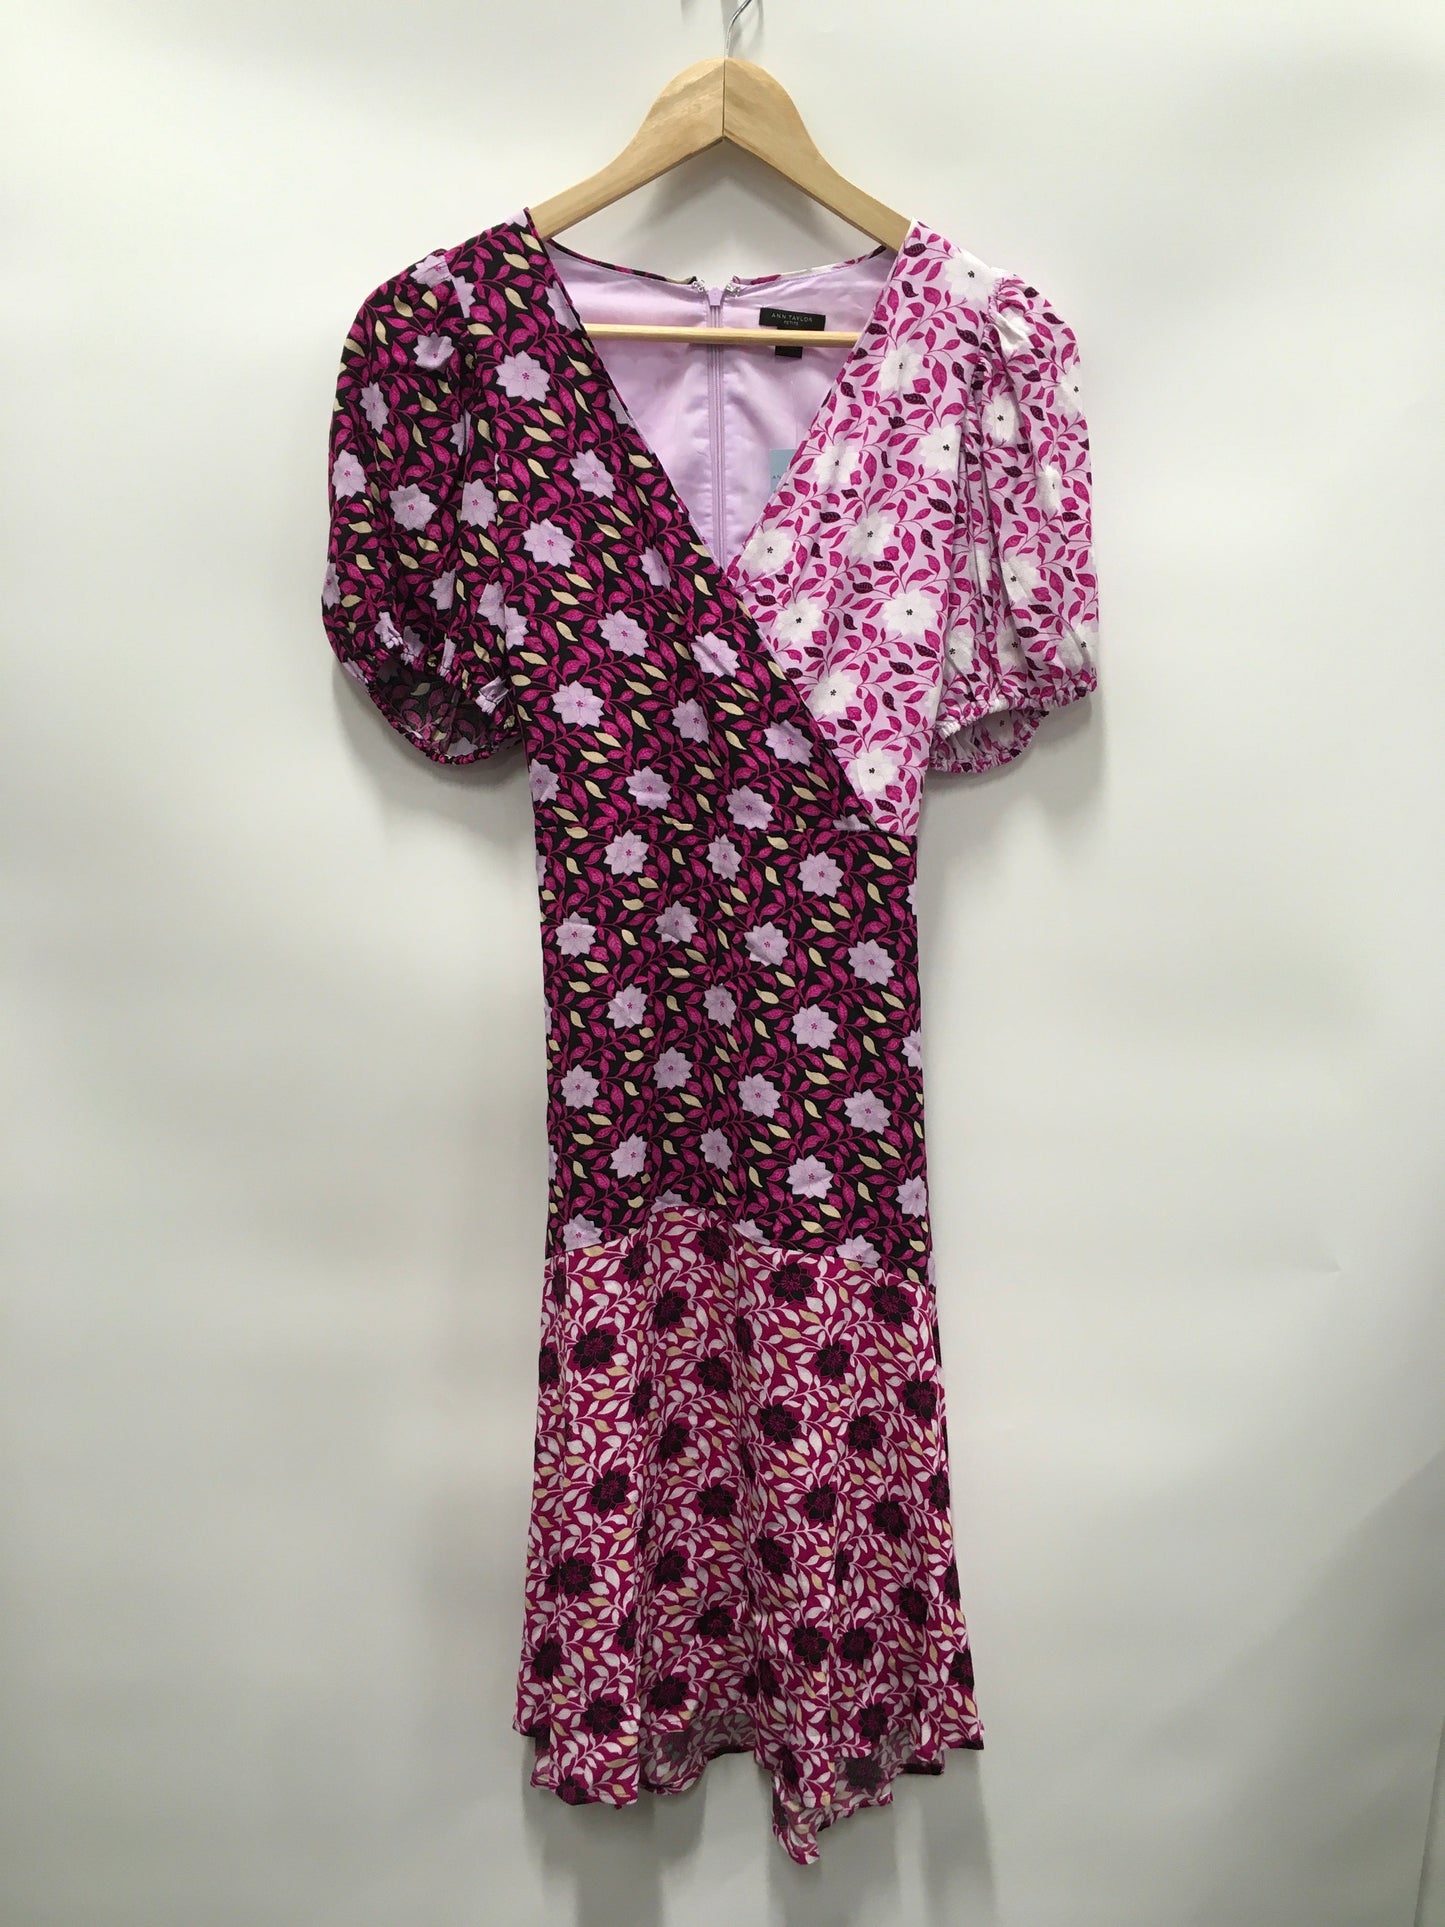 Purple Dress Casual Short Ann Taylor, Size 8petite